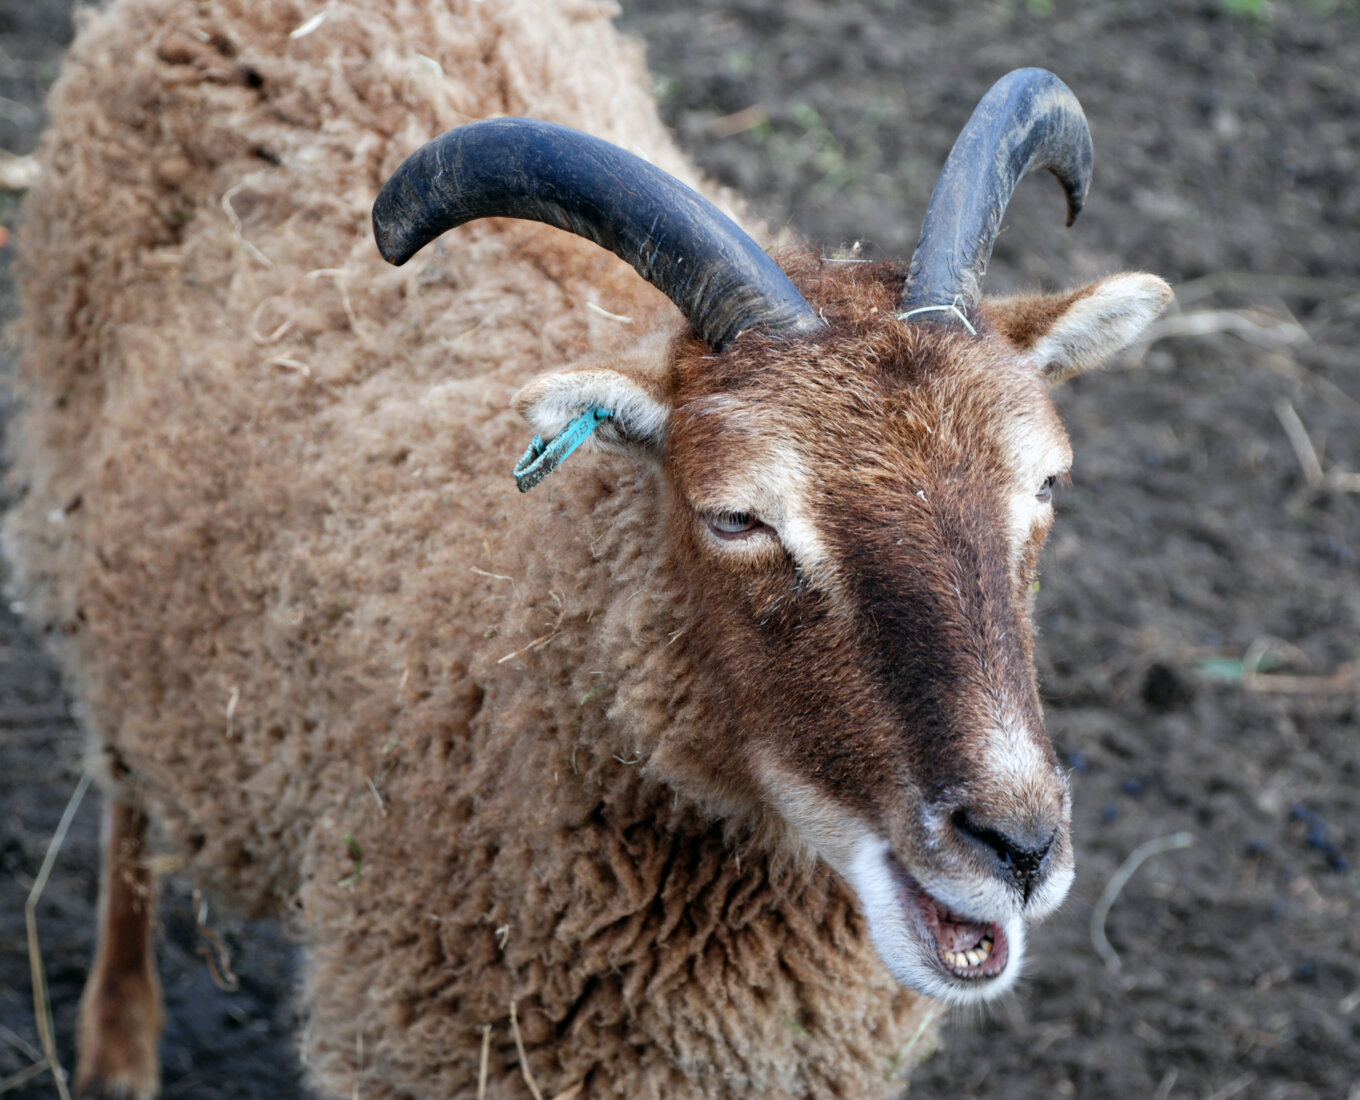 Soay Sheep 2 at Heeley City Farm by Philippa Willitts